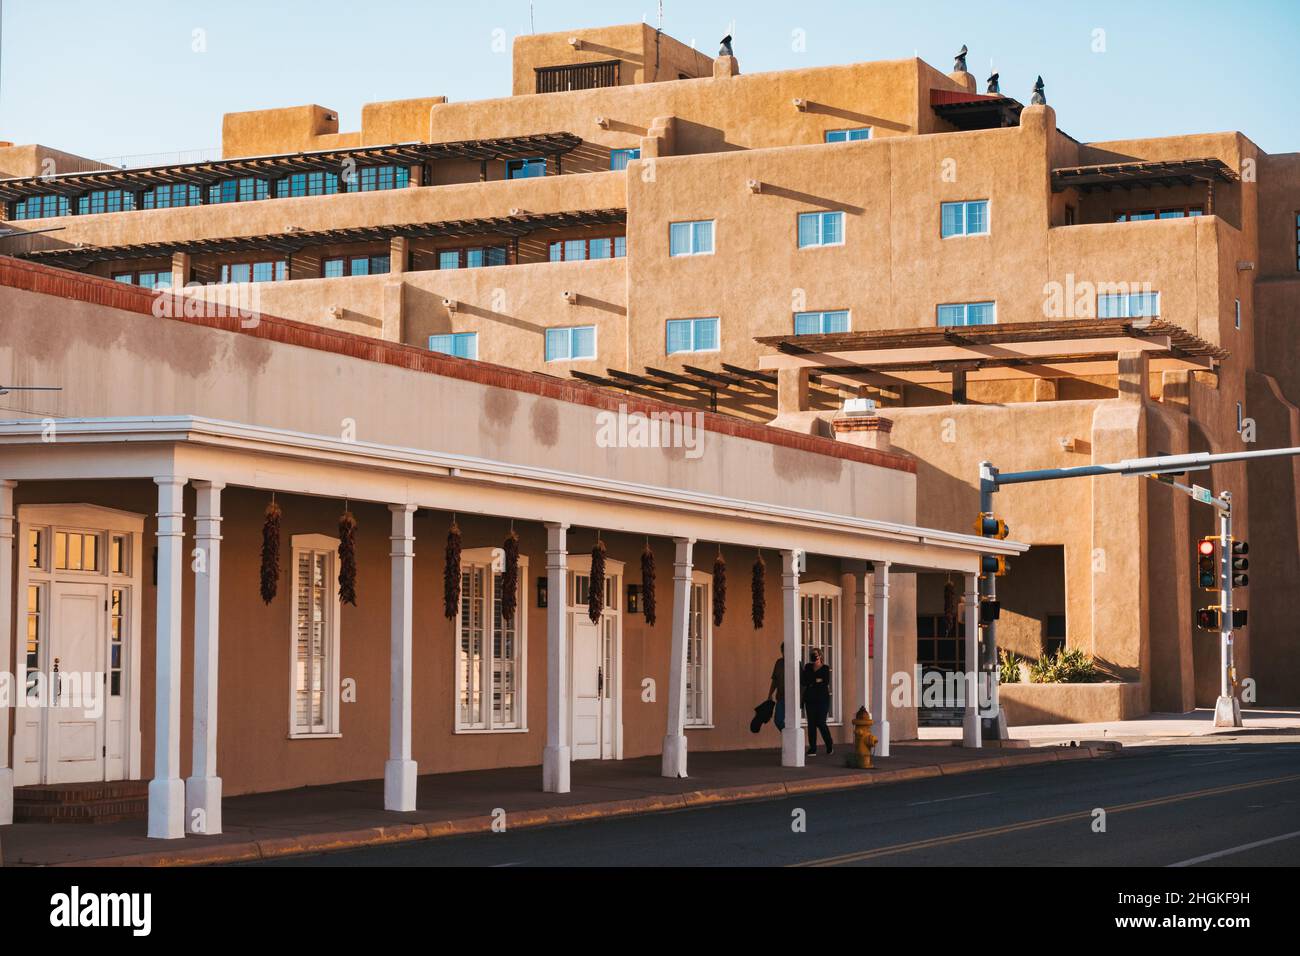 the Hilton Historic Plaza (1600s hacienda) and Eldorado Hotel & Spa (adobe-style) in Santa Fe, New Mexico, United States Stock Photo